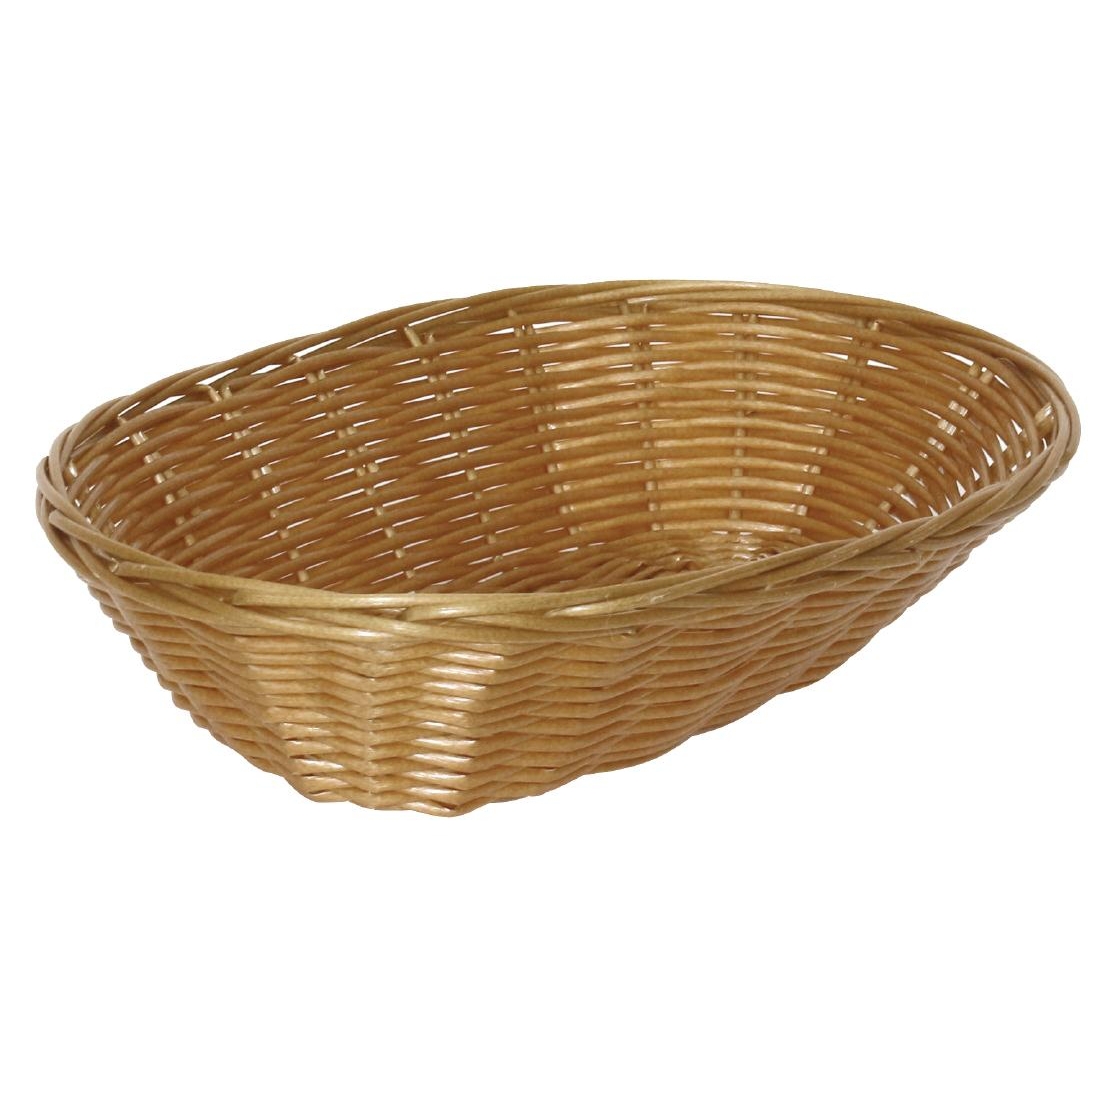 Poly Wicker Oval Food Basket